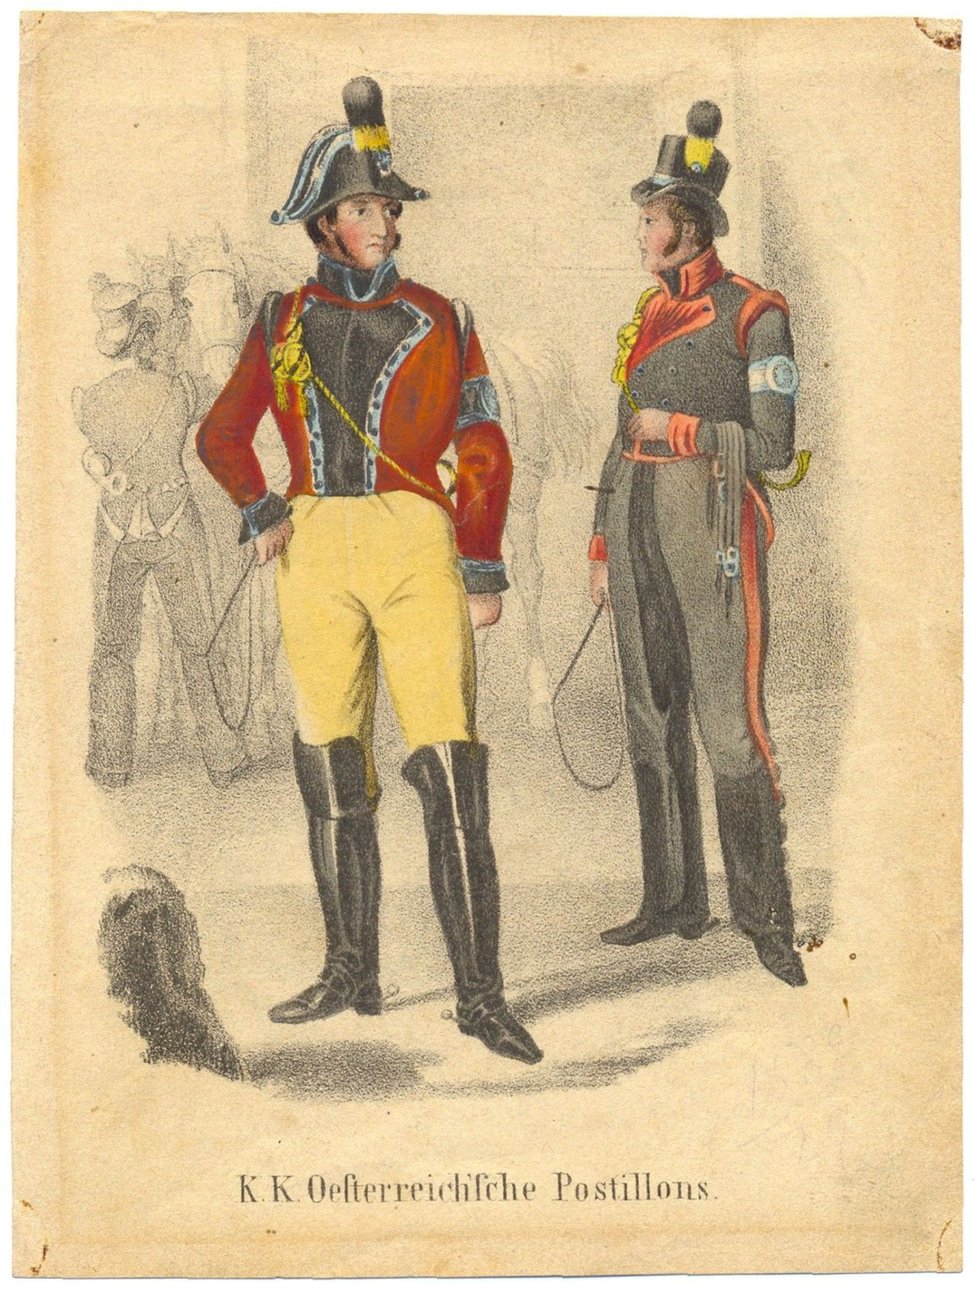 Vzhled rakouského postiliona v roce 1838